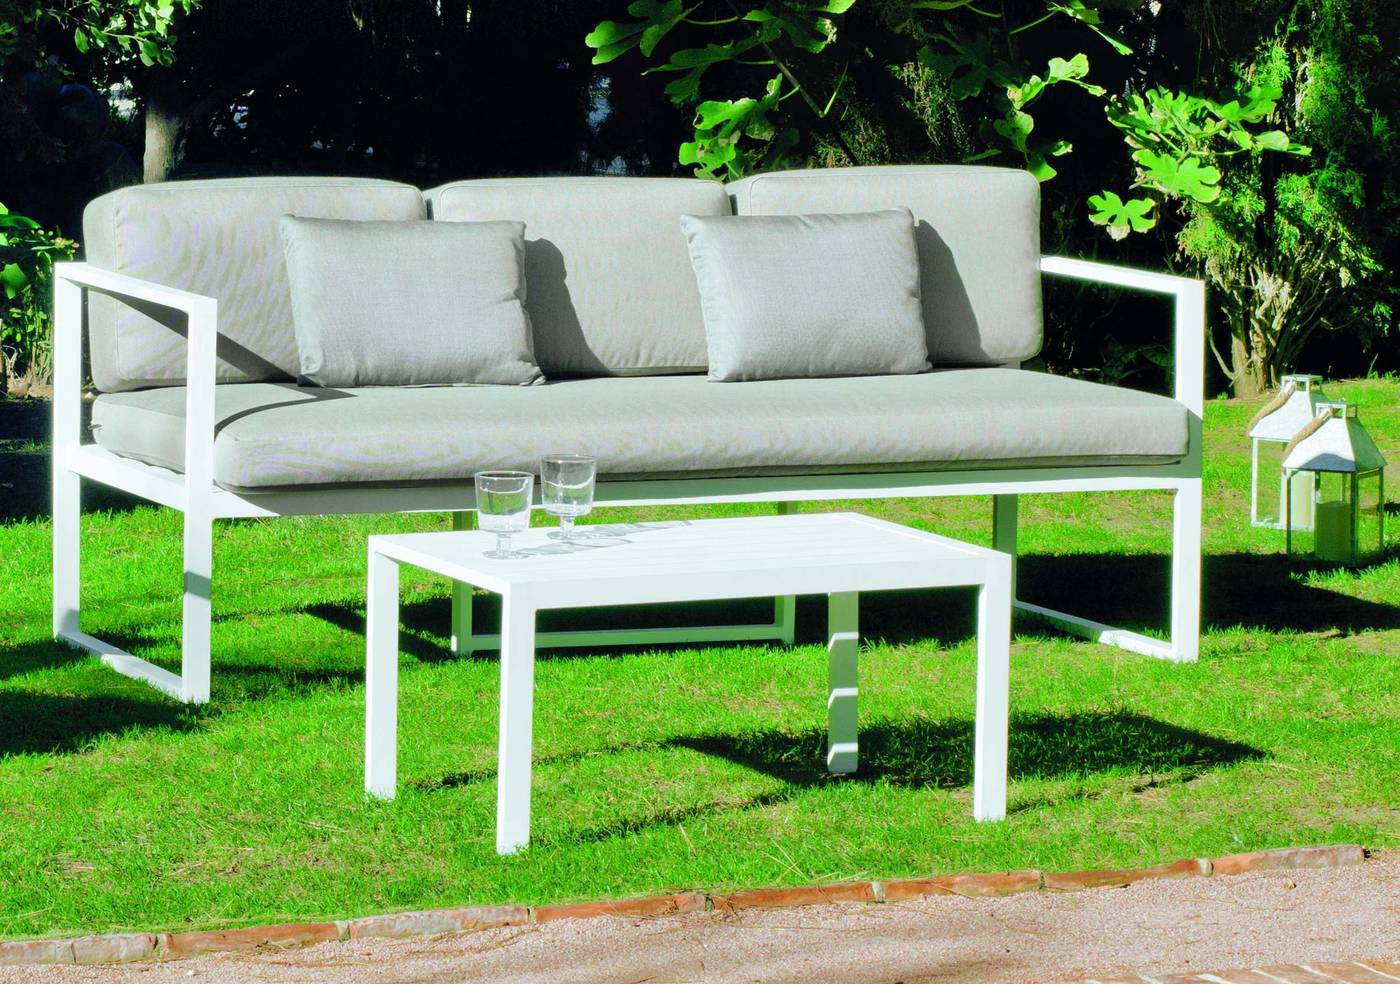 Set Aluminio Martinique-8 - Conjunto aluminio : 1 sofá de 3 plazas + 2 sillones + 1 mesa de centro + cojines. Disponible en color blanco, champagne, bronce o antracita.